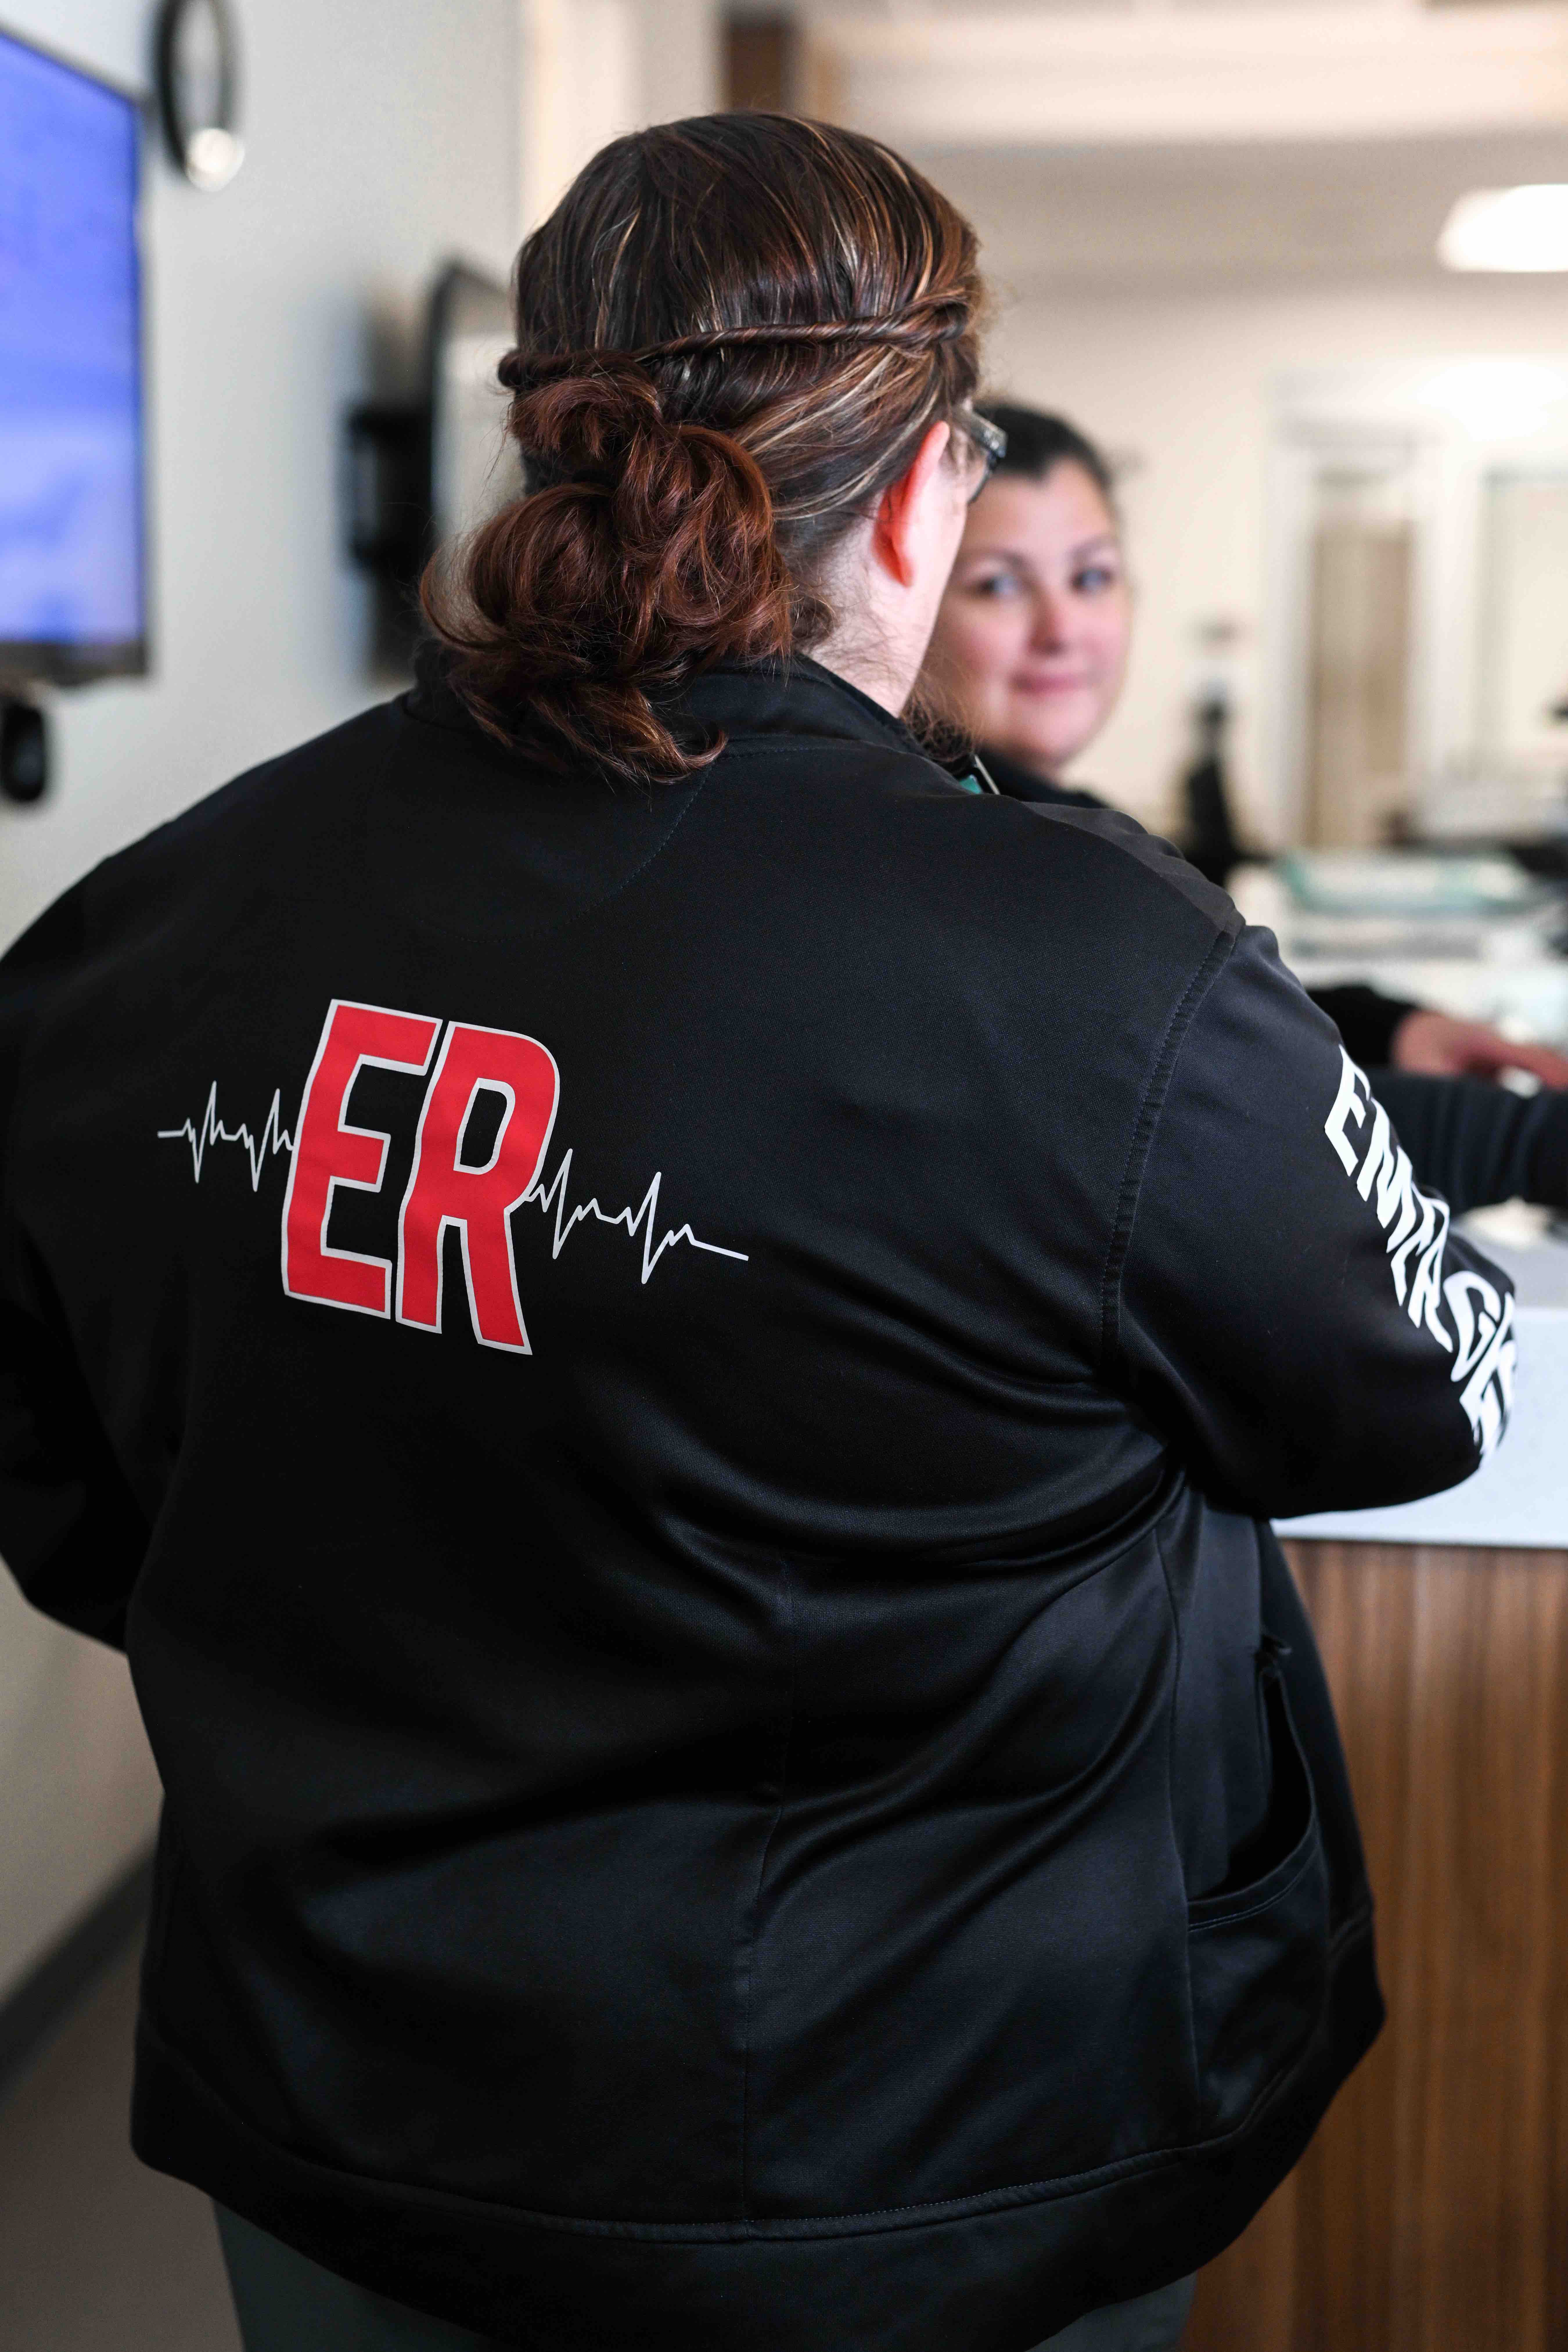 Madison Health Emergency Room provider with black ER jacket on